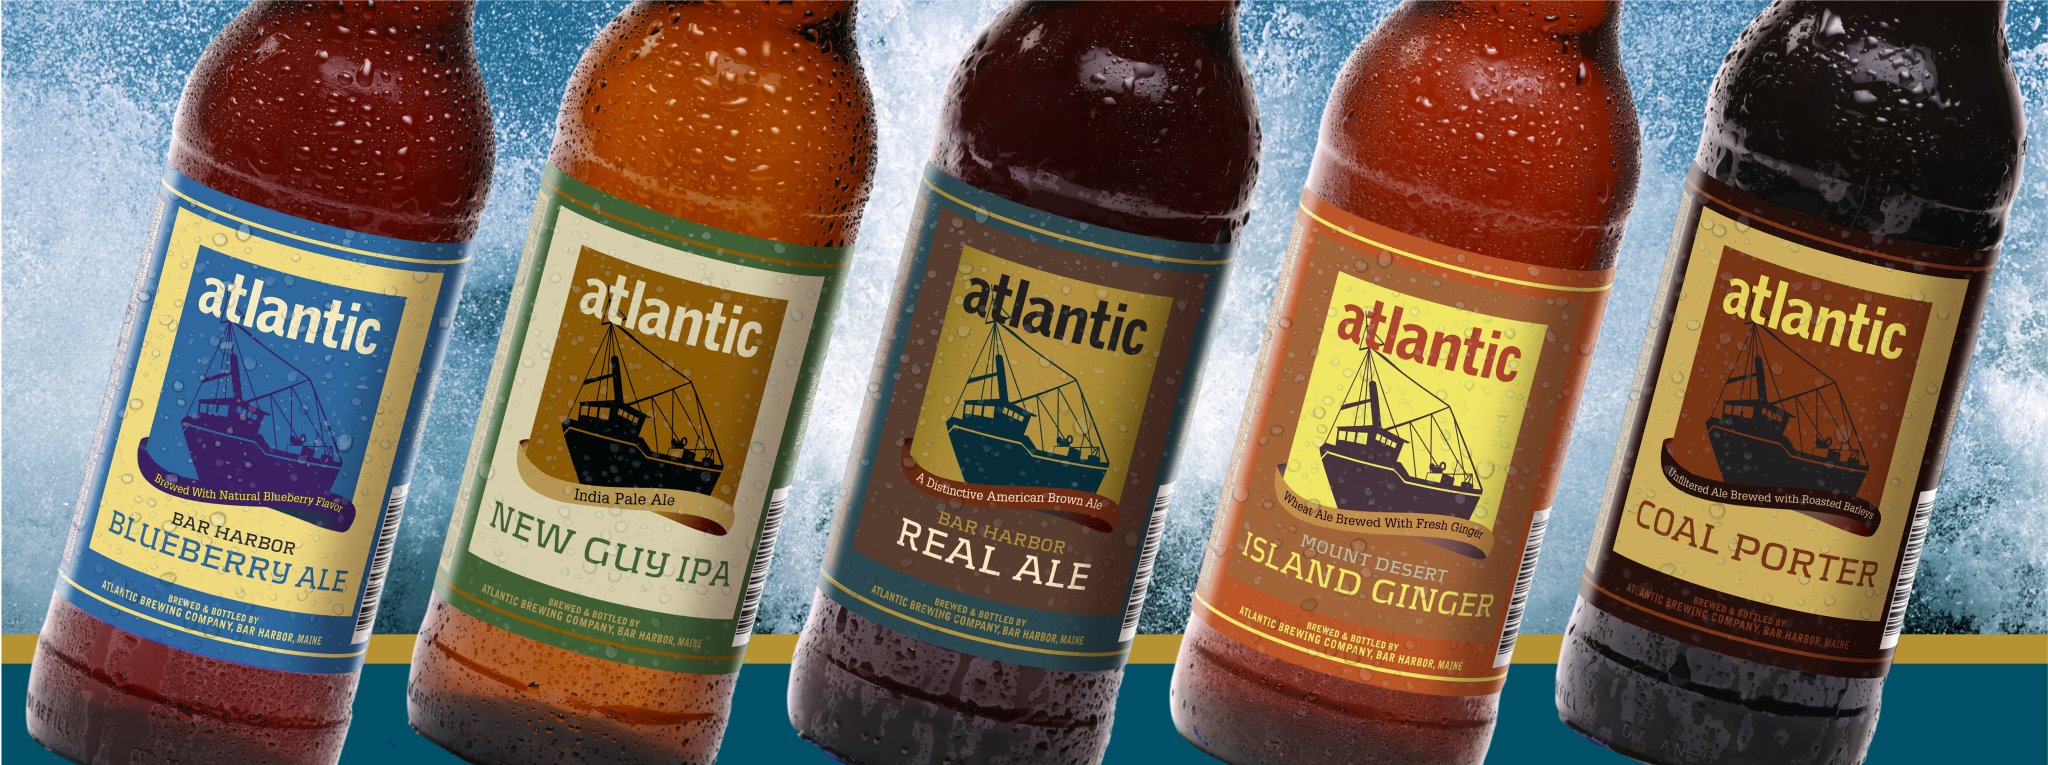 Atlantic Brewing Company | Bar Harbor Blueberry Ale